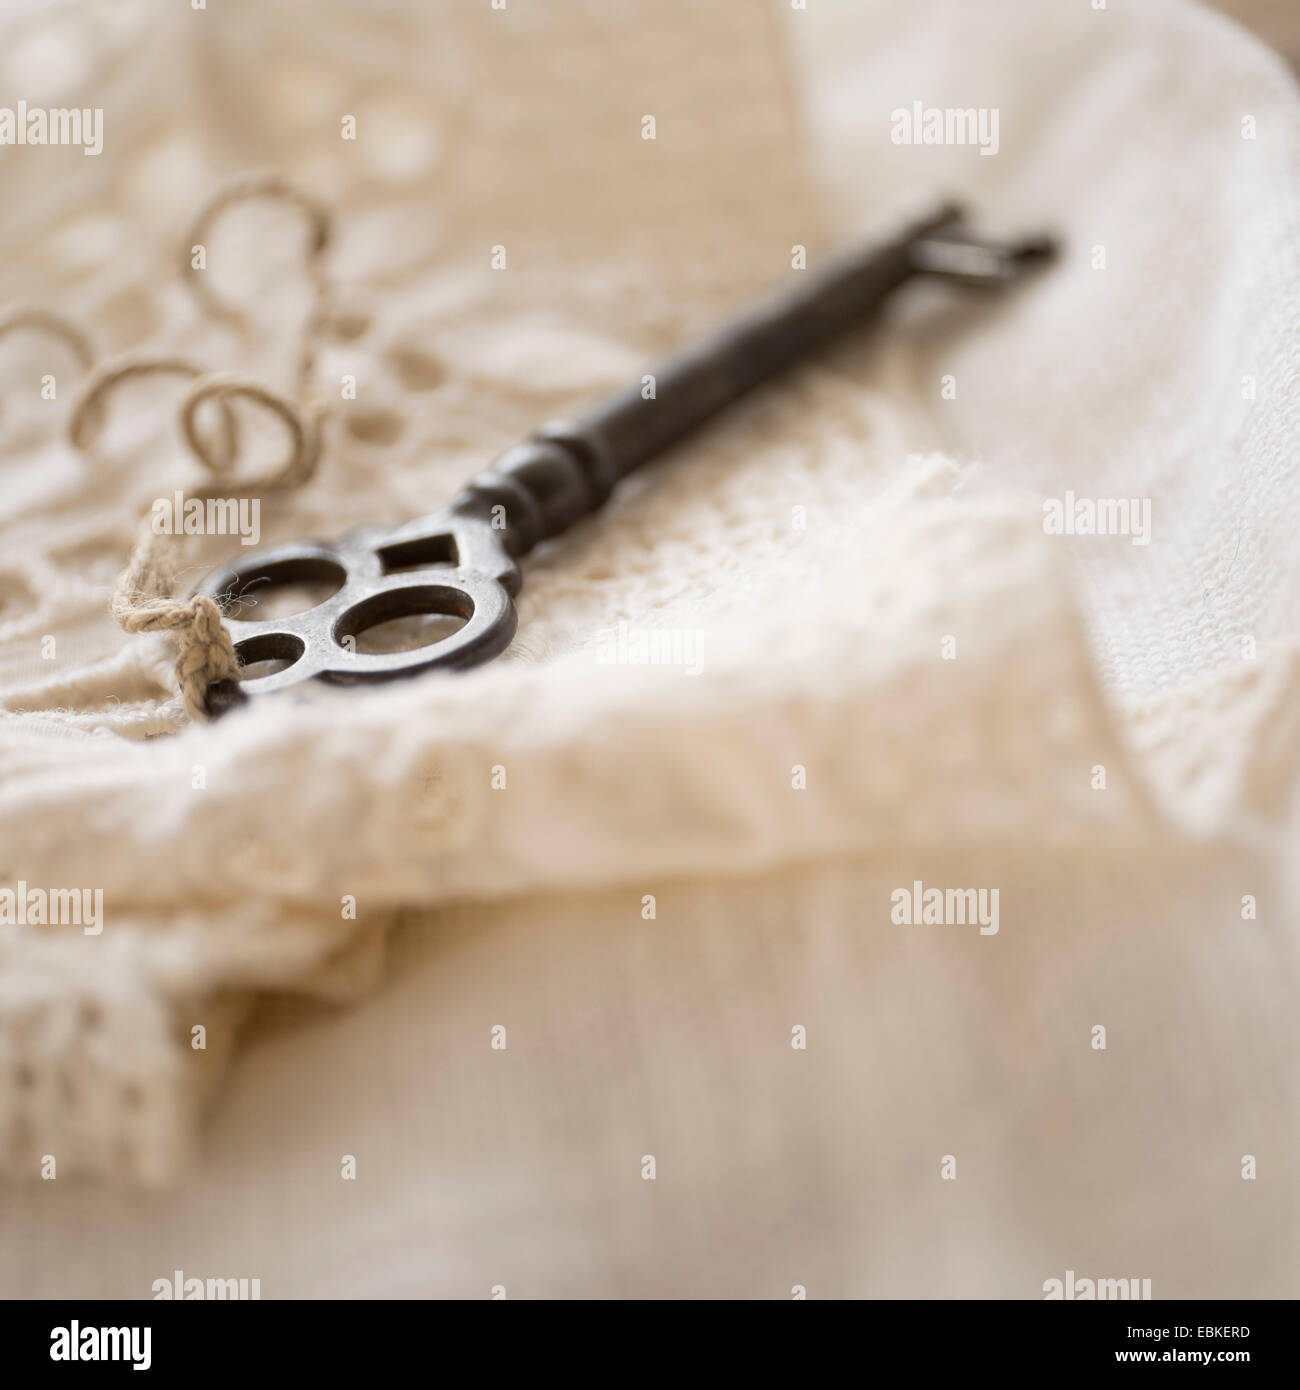 Studio shot of antique key on lace cloth Stock Photo